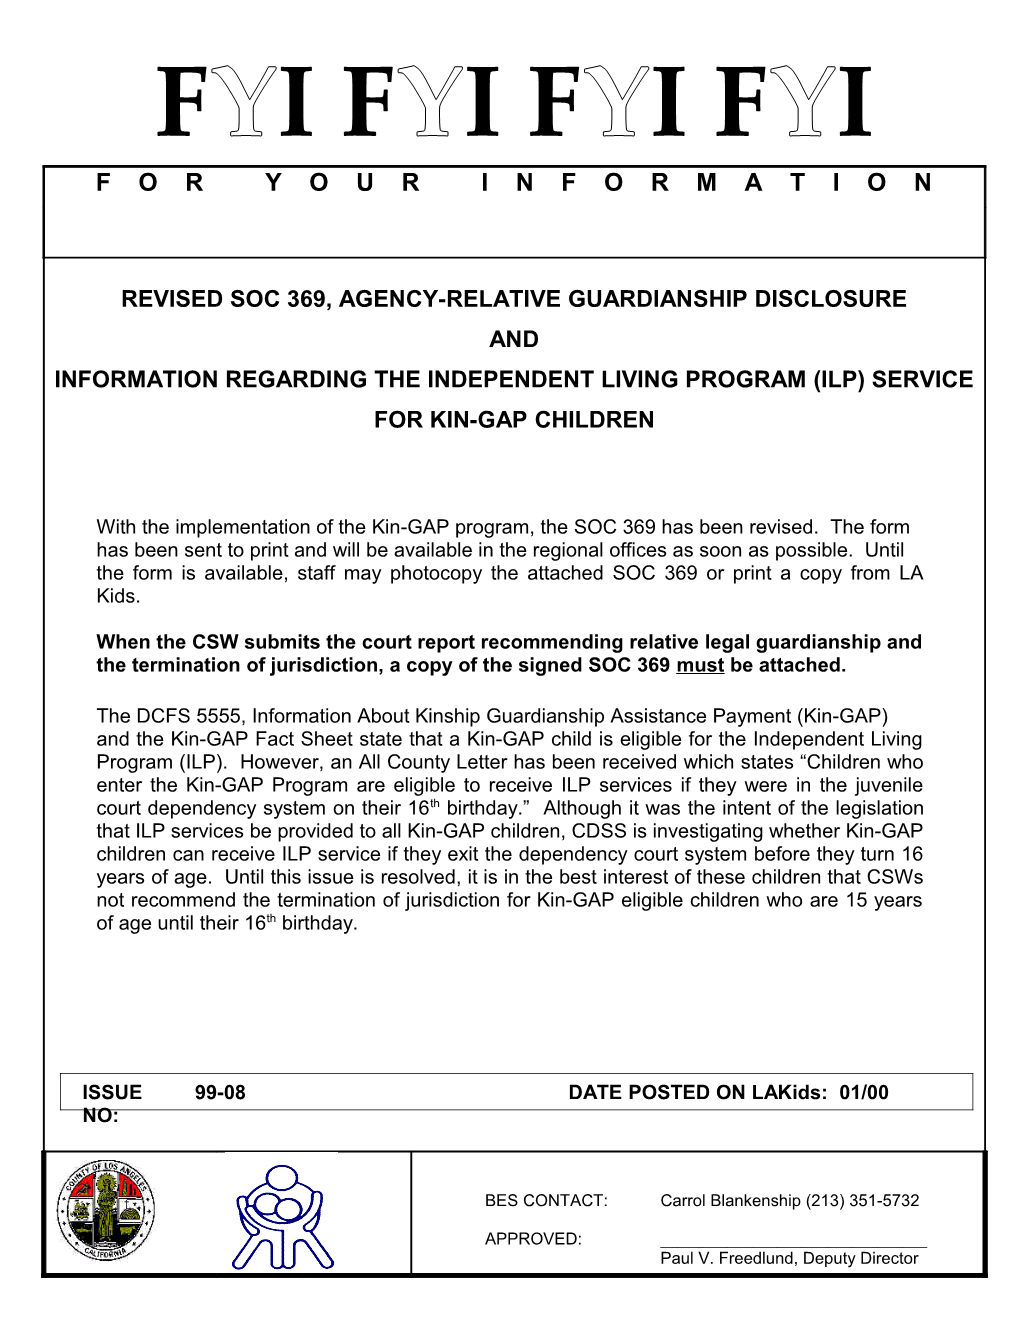 Revised SOC 369 & ILP for Kin-GAP Children